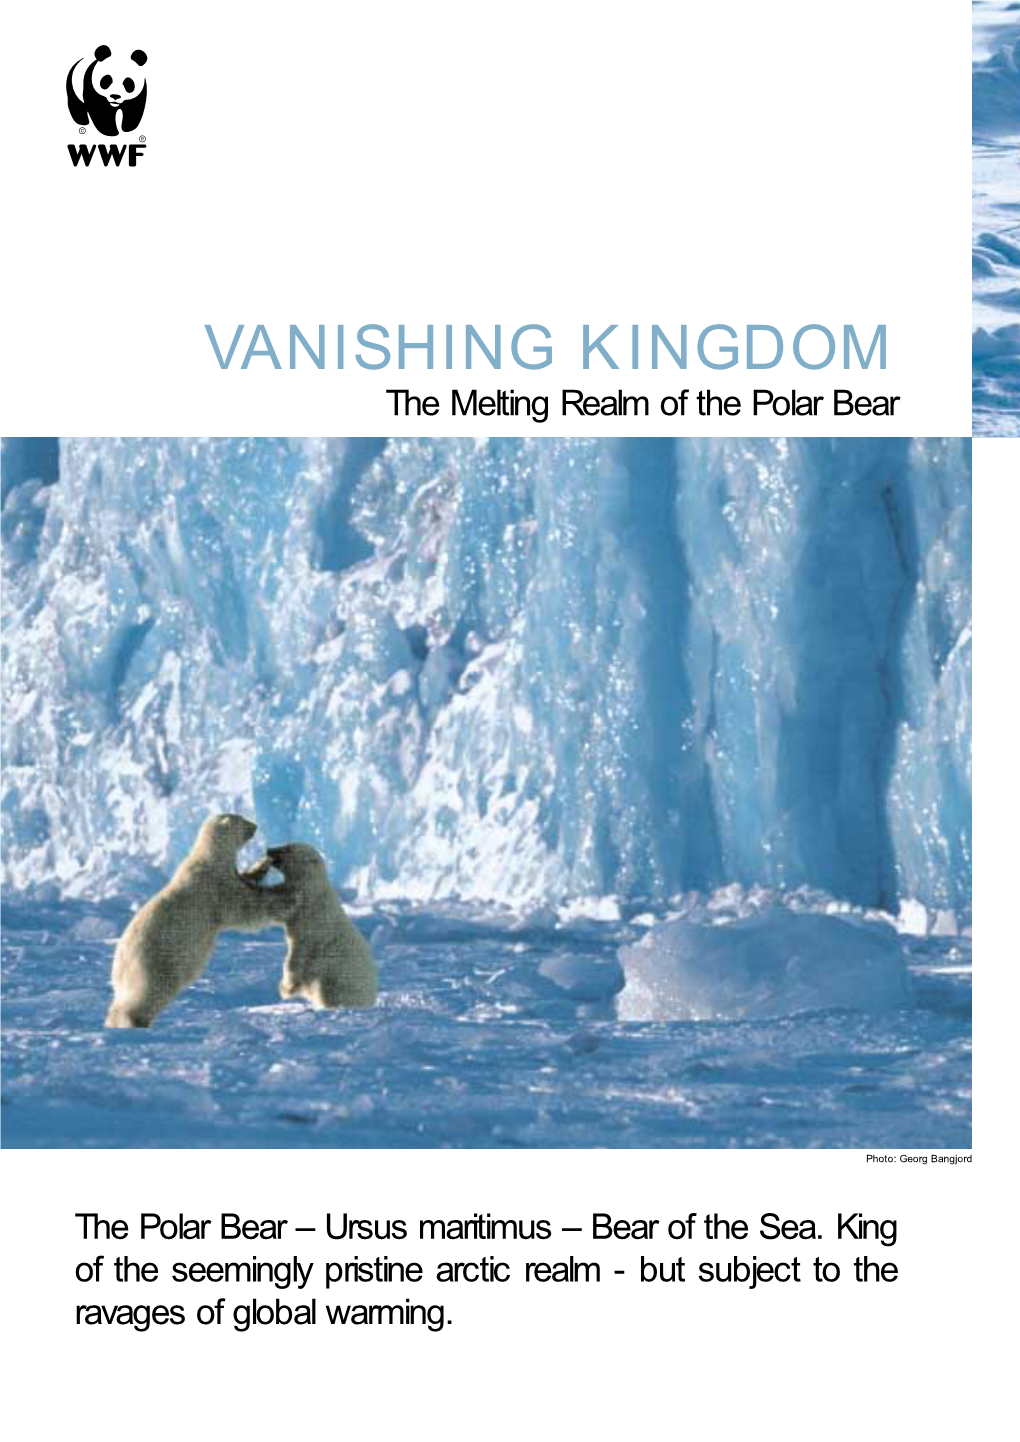 VANISHING KINGDOM the Melting Realm of the Polar Bear